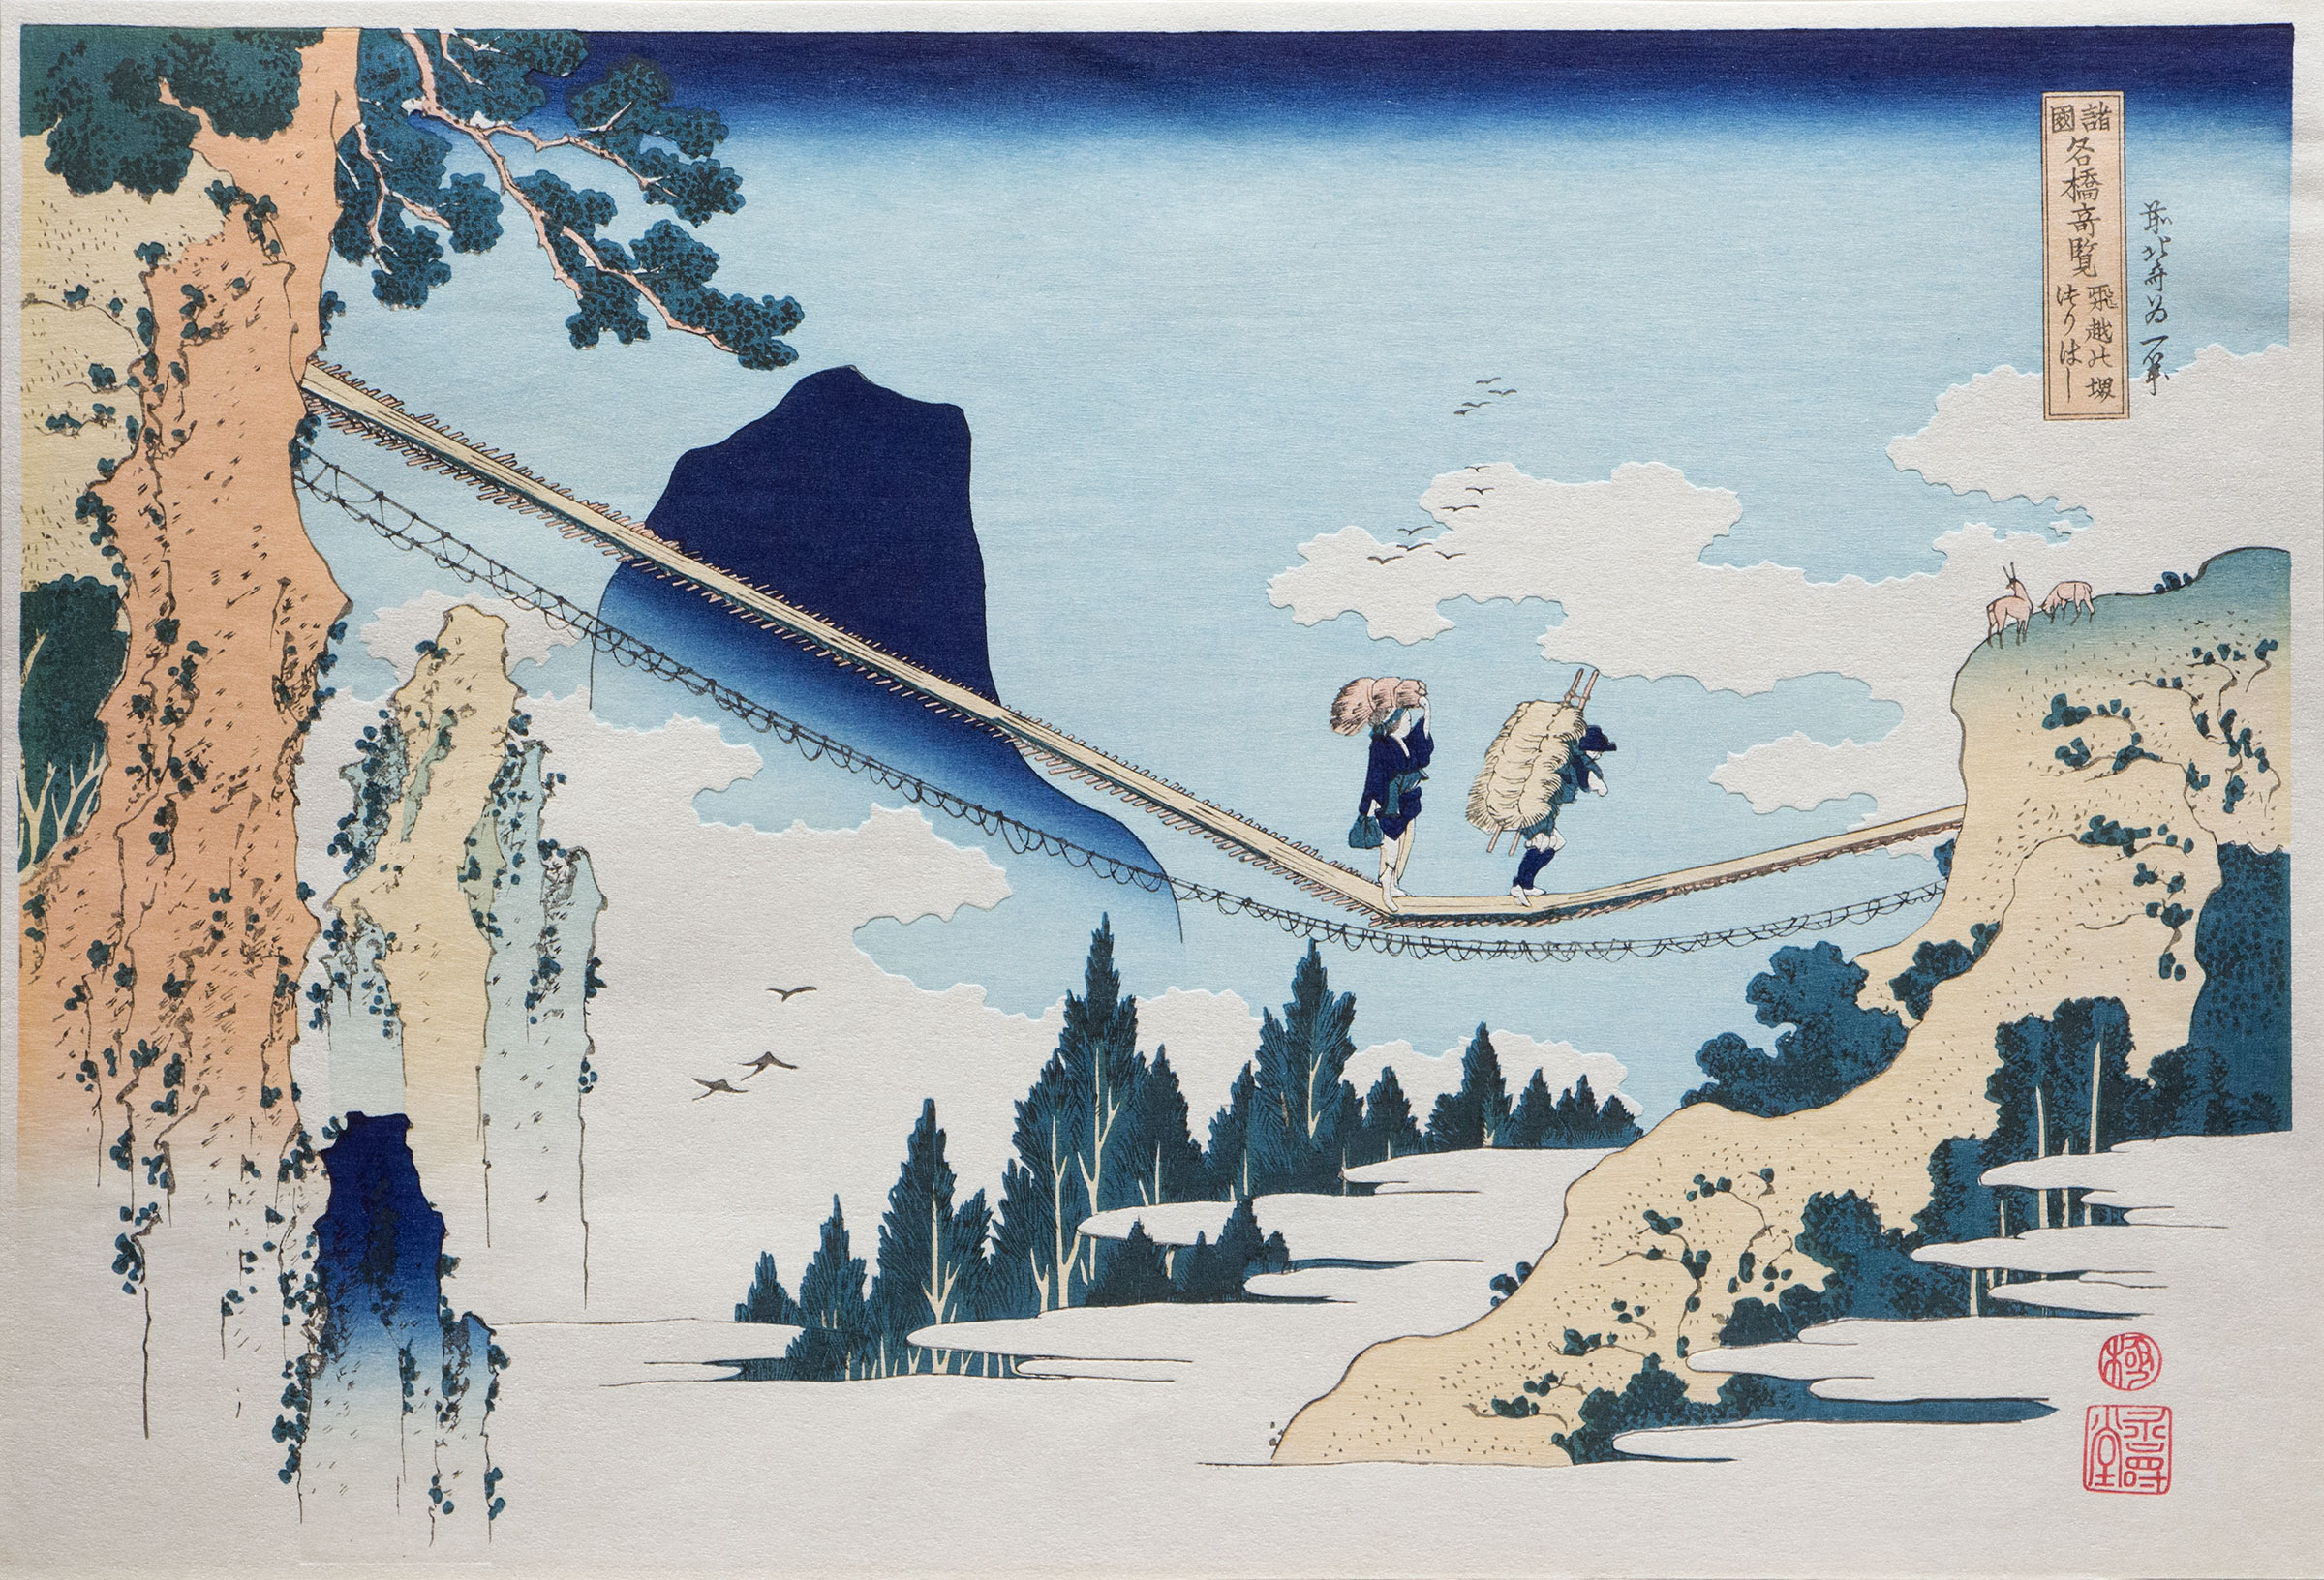 Hokusai Woodblock Print Japanese Art Traditional Artwork Bridge Suspension Bridge Clouds Birds Mount 2400x1632